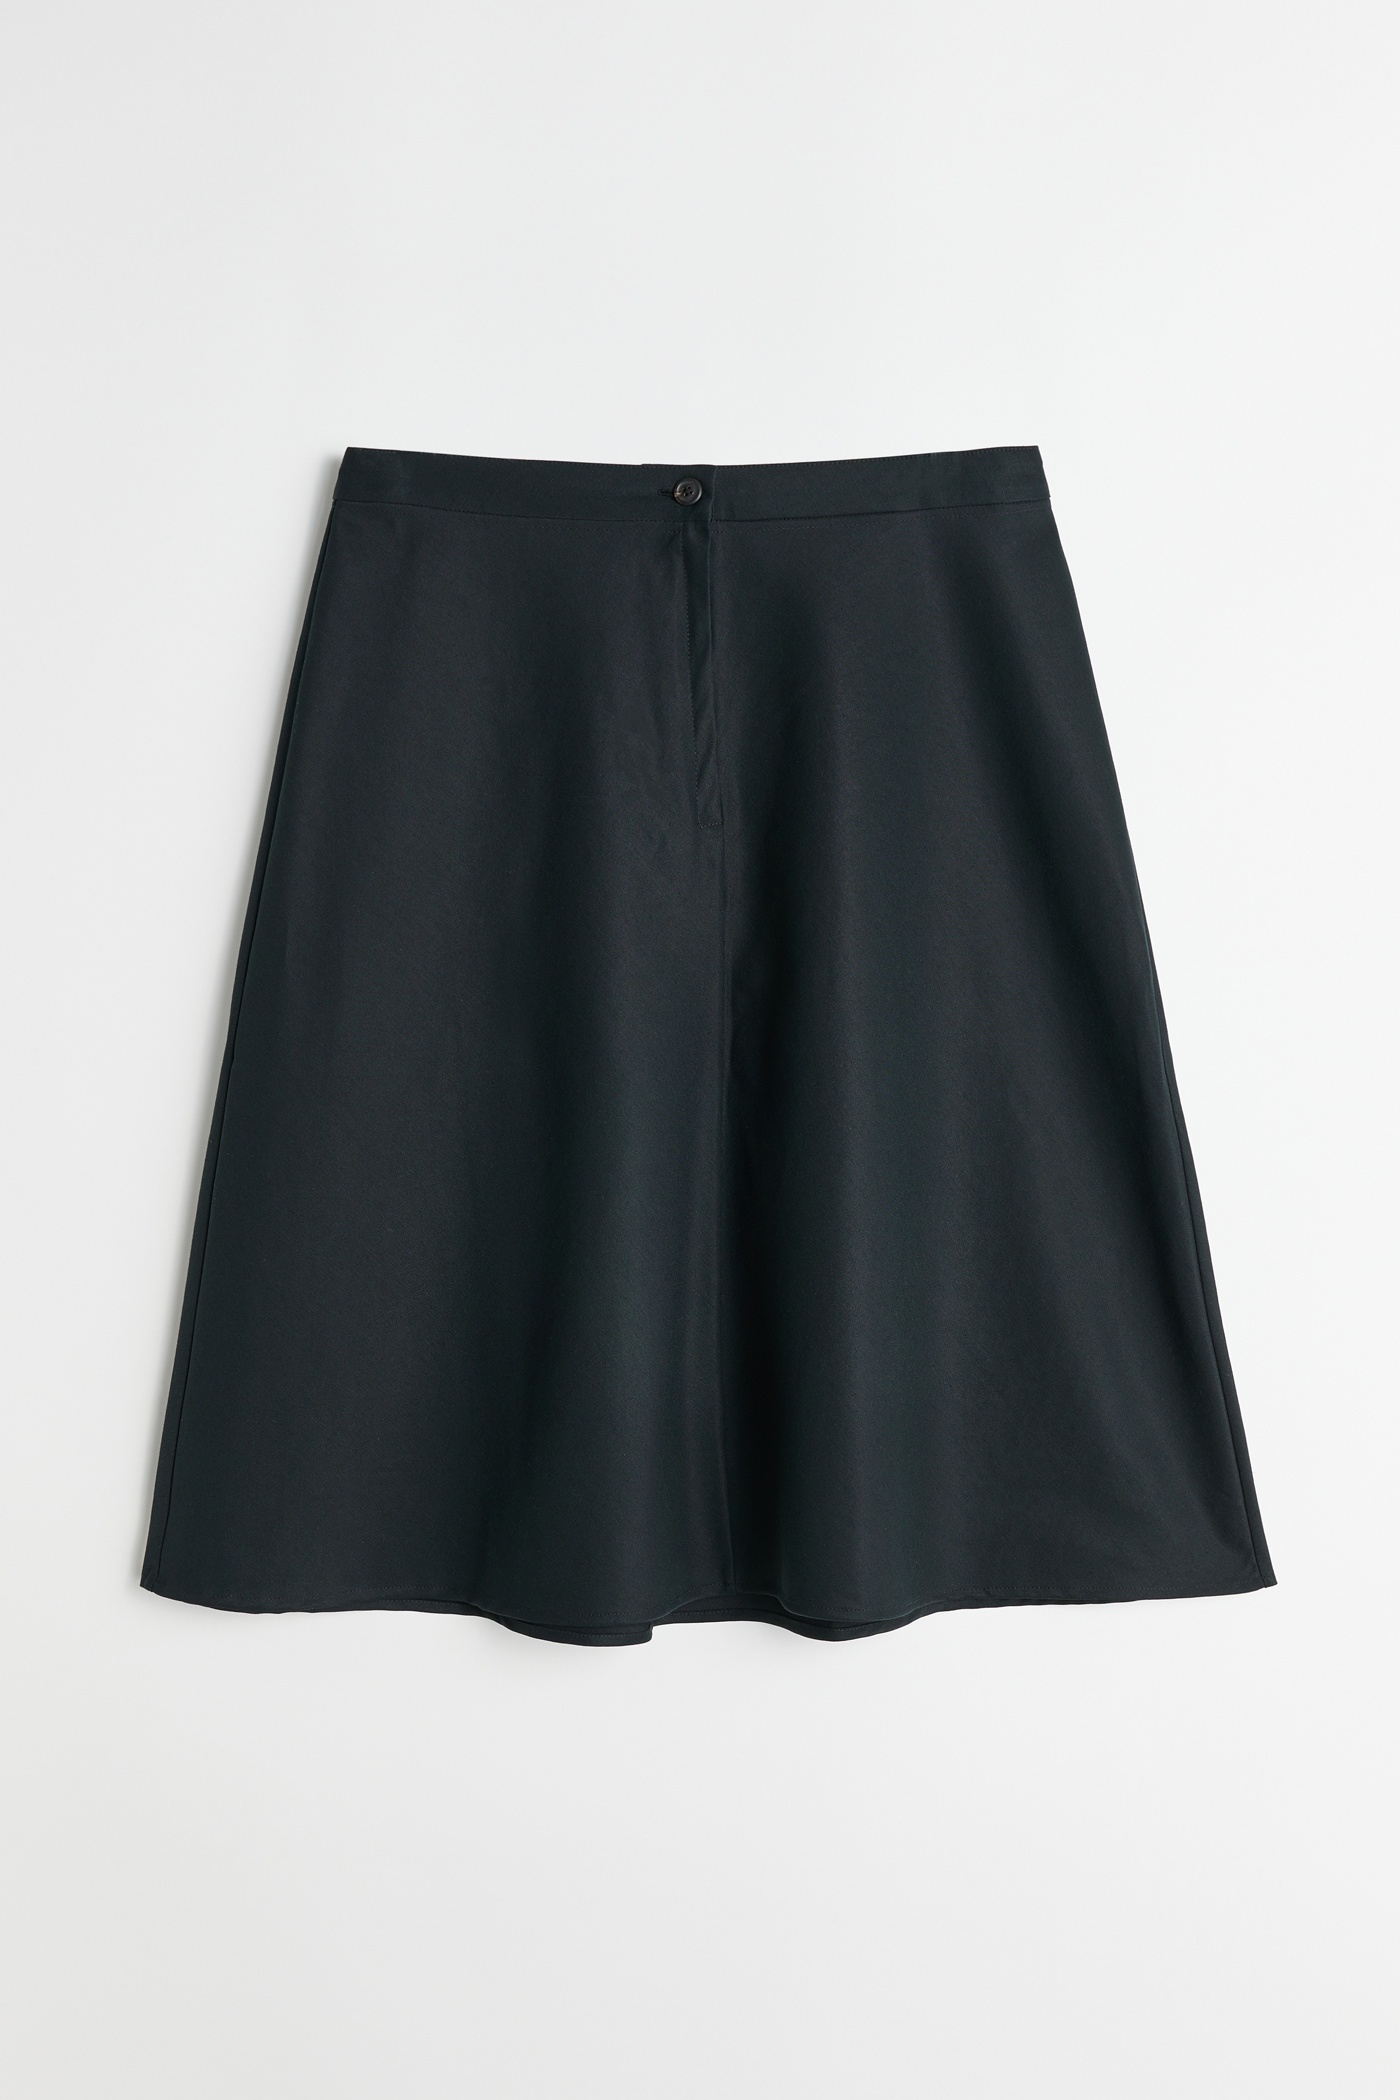 Curtain Skirt Deluxe Black Exquisite Wool - 1